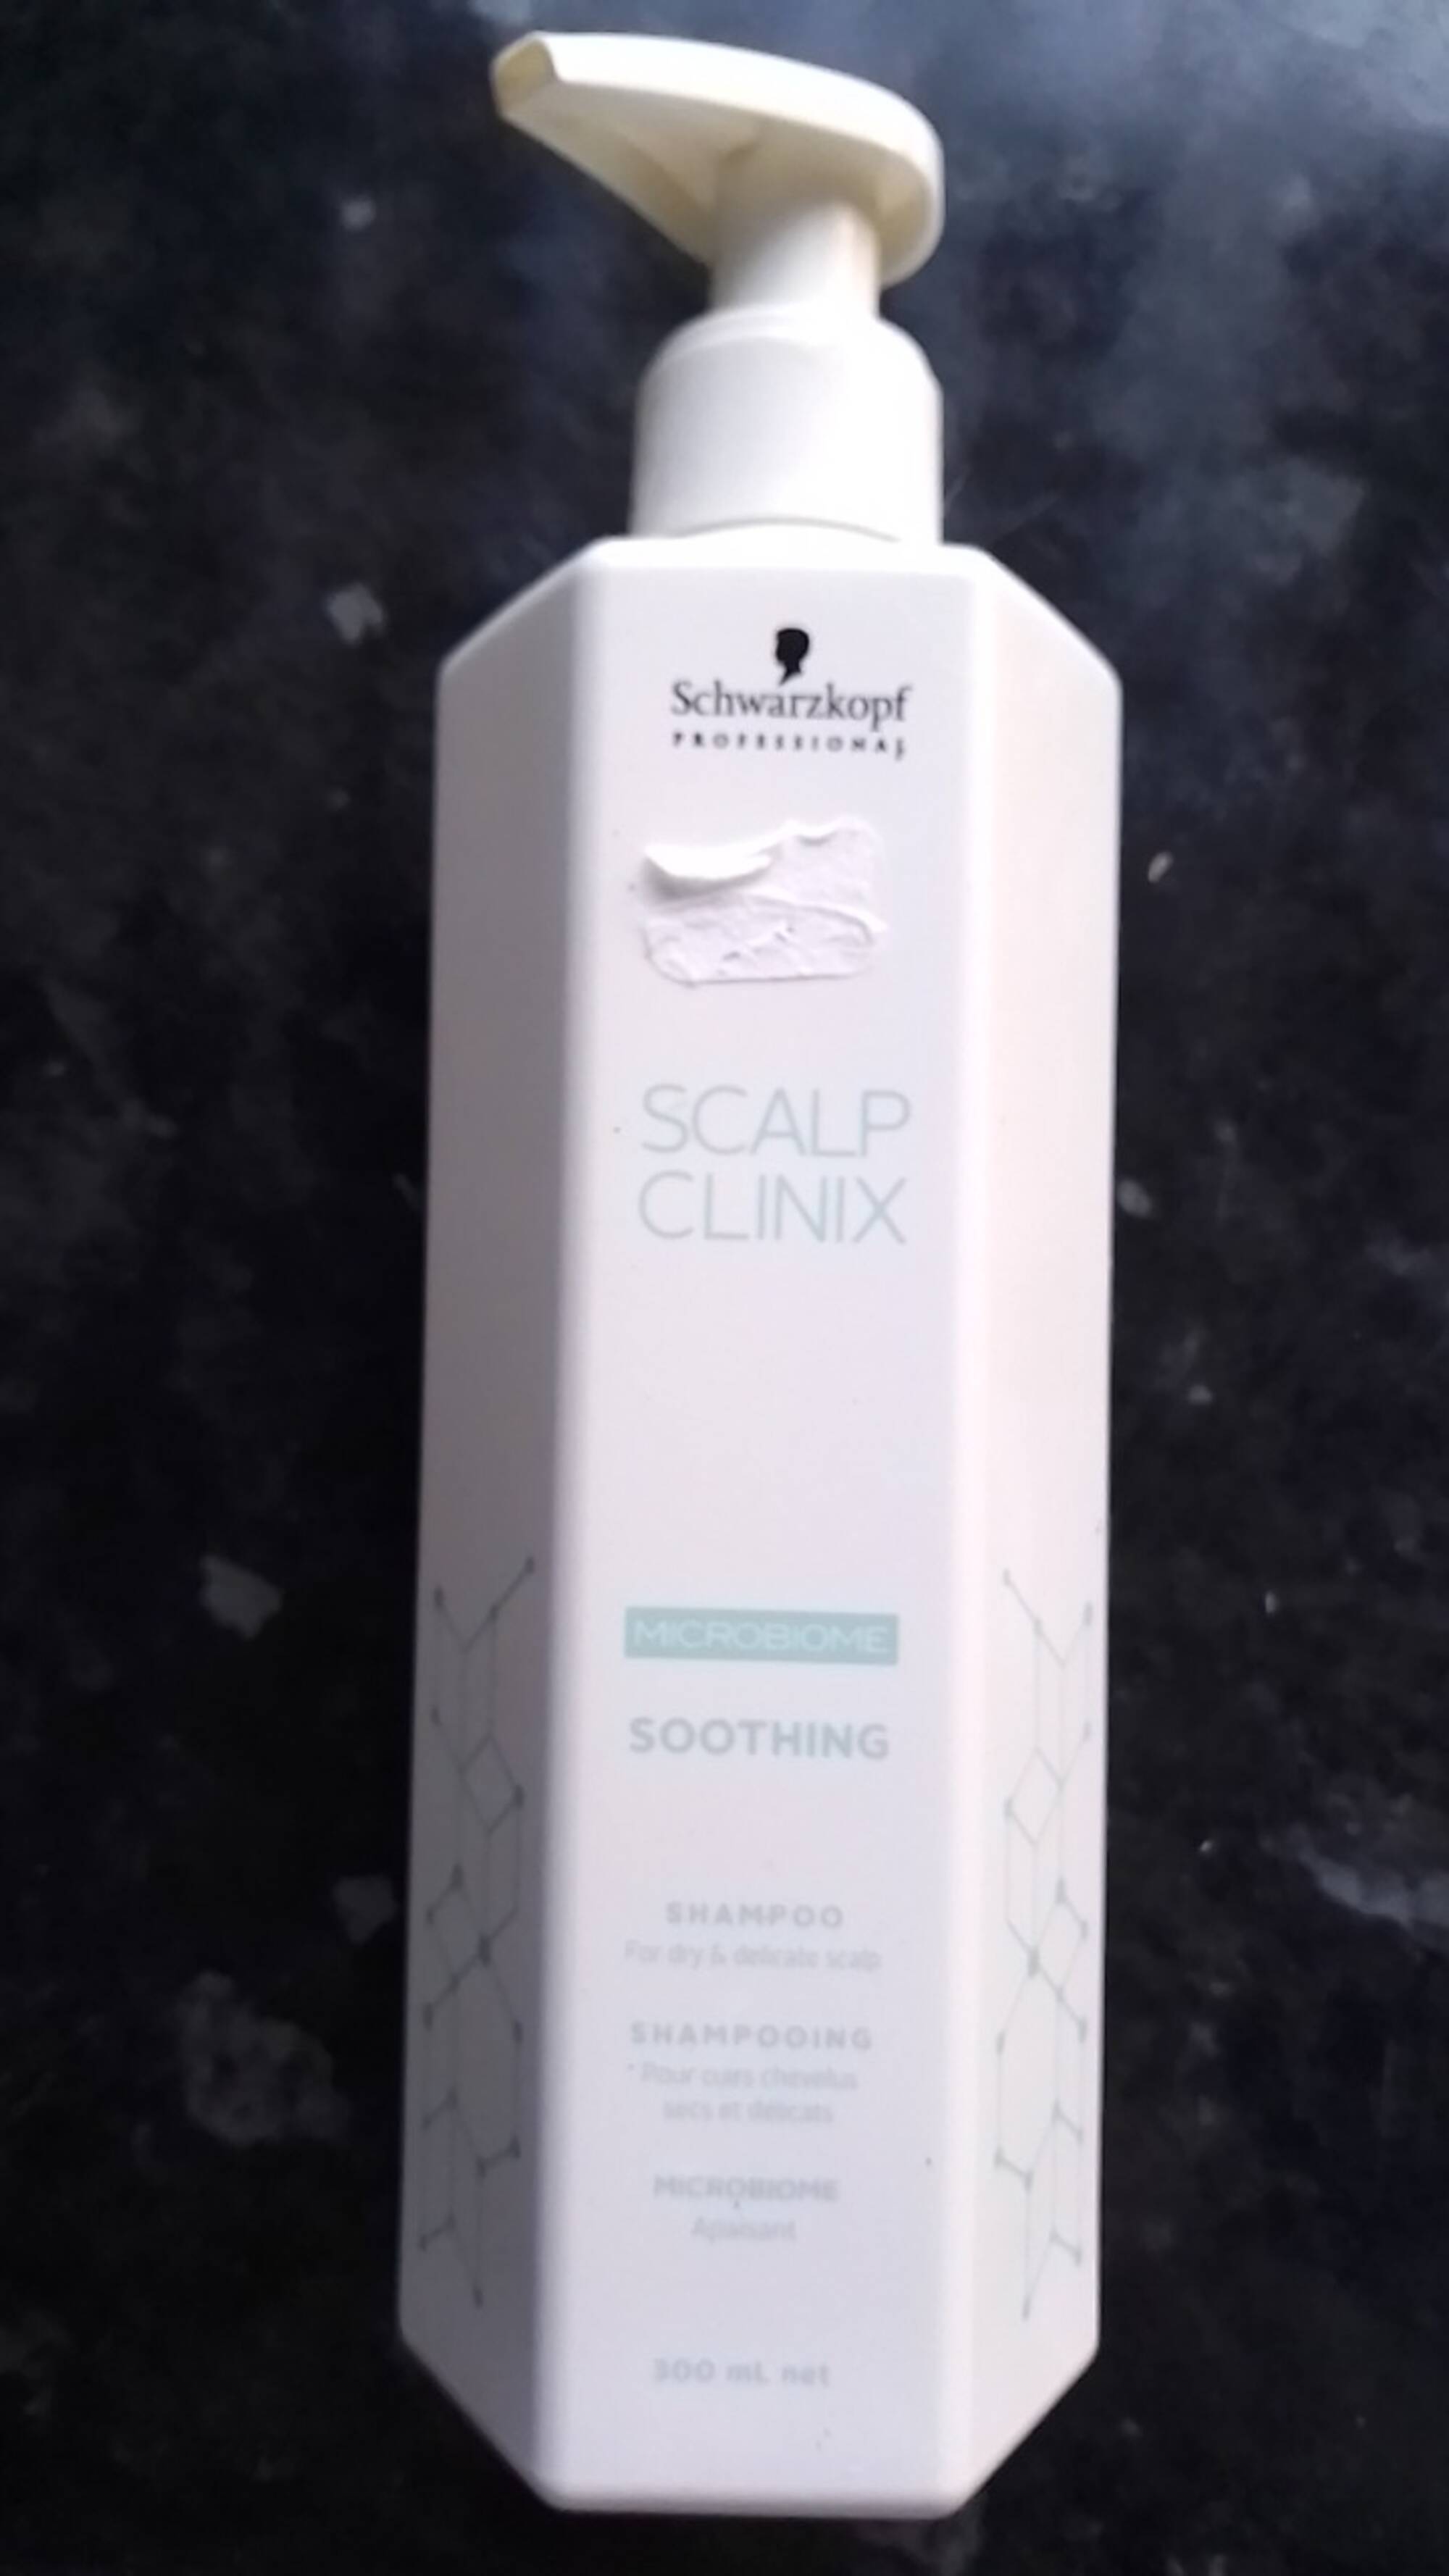 SCHWARZKOPF - Scalp clinix - Soothing shampoo